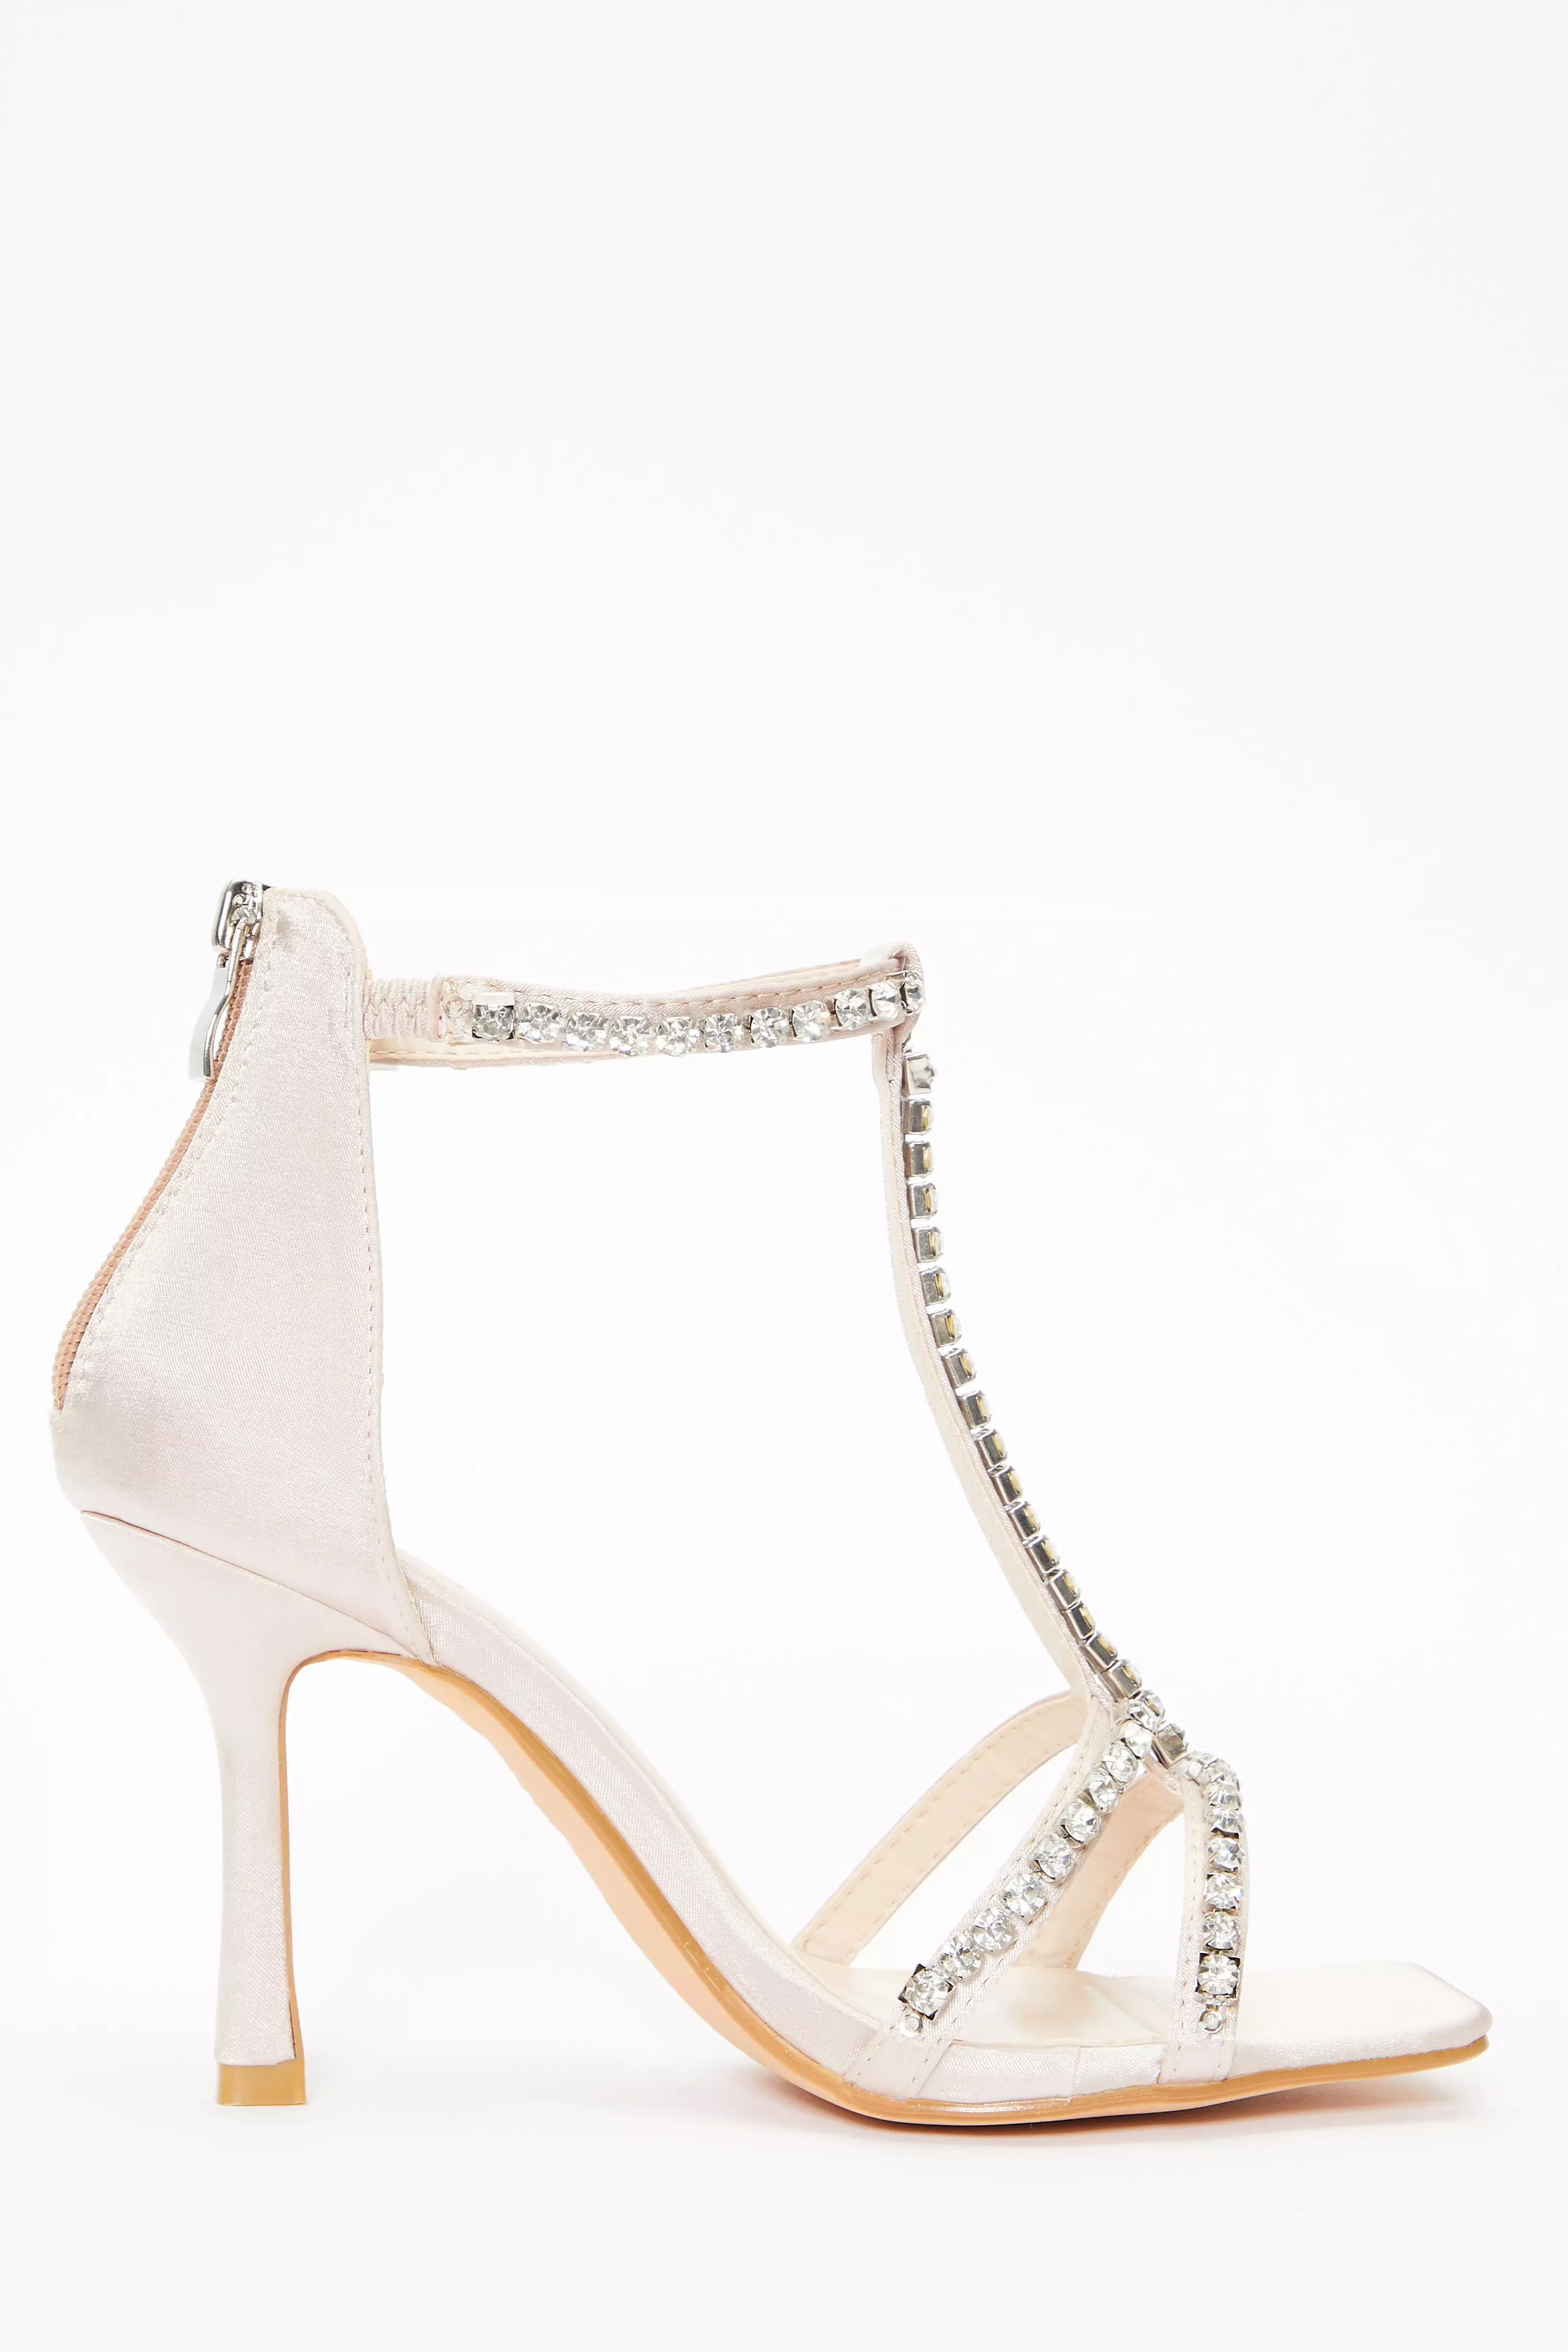 Champagne Satin Diamante Stone T-Bar Heeled Sandals - QUIZ Clothing